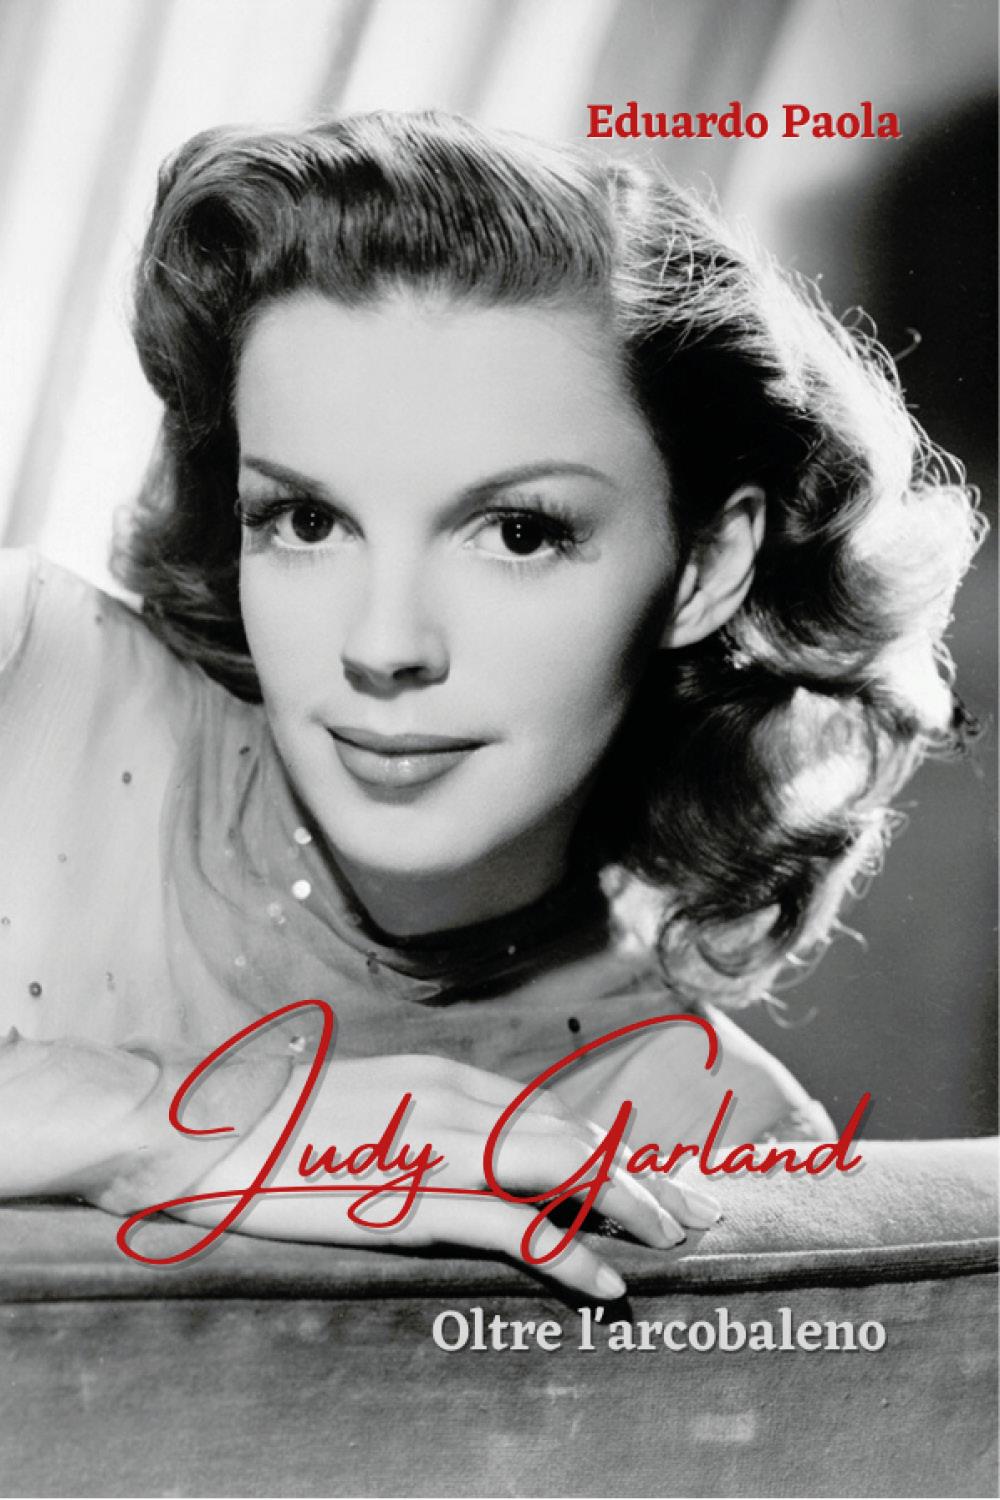 Judy Garland - Oltre l'arcobaleno